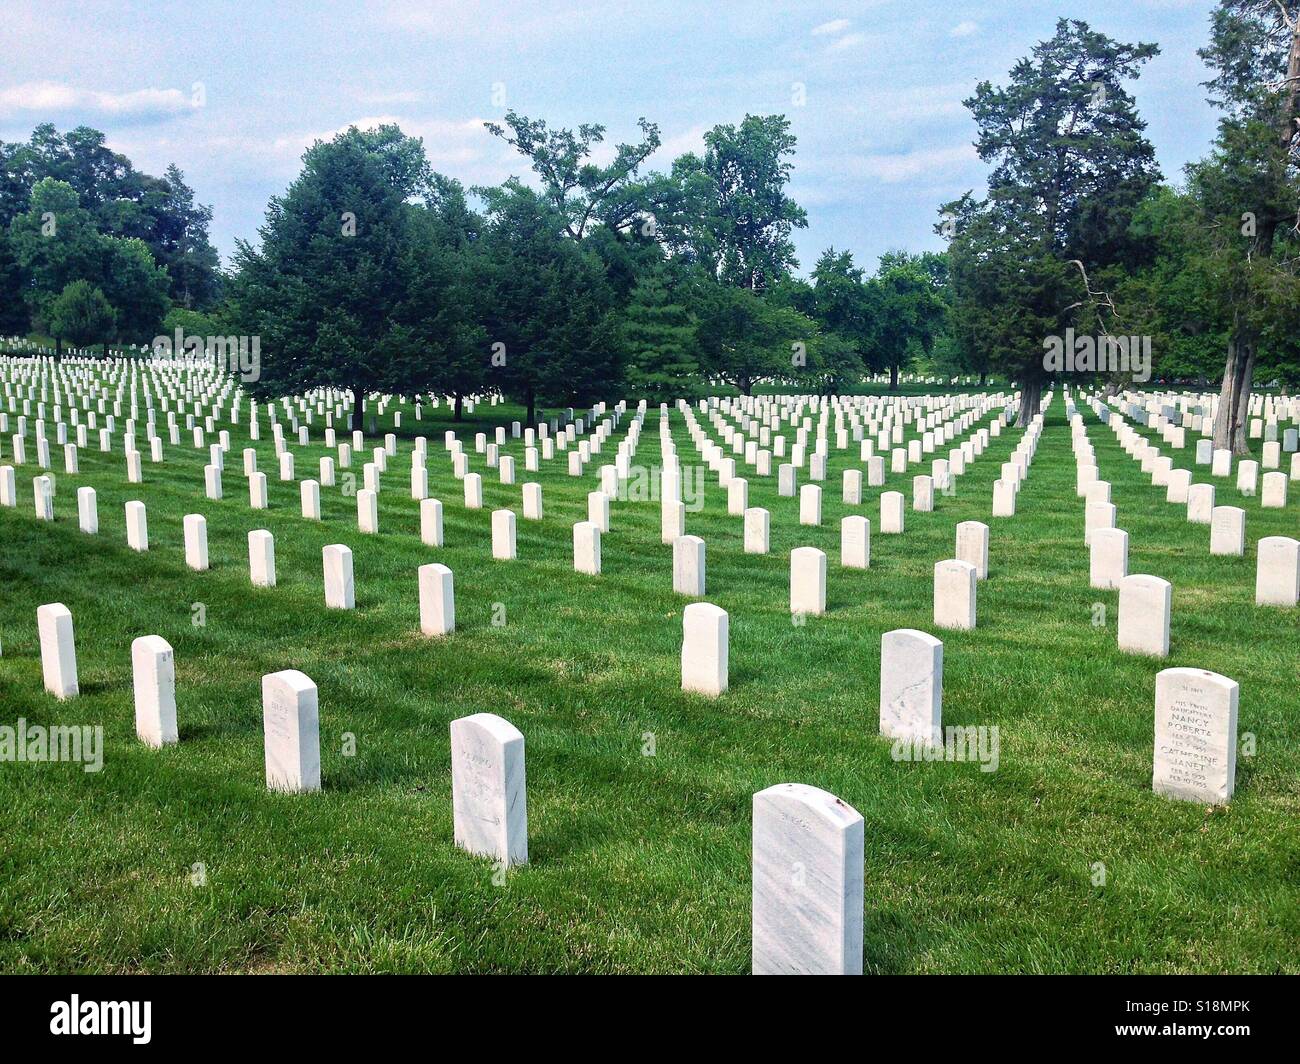 Rows of Headstones at Arlington National Cemetery Stock Photo